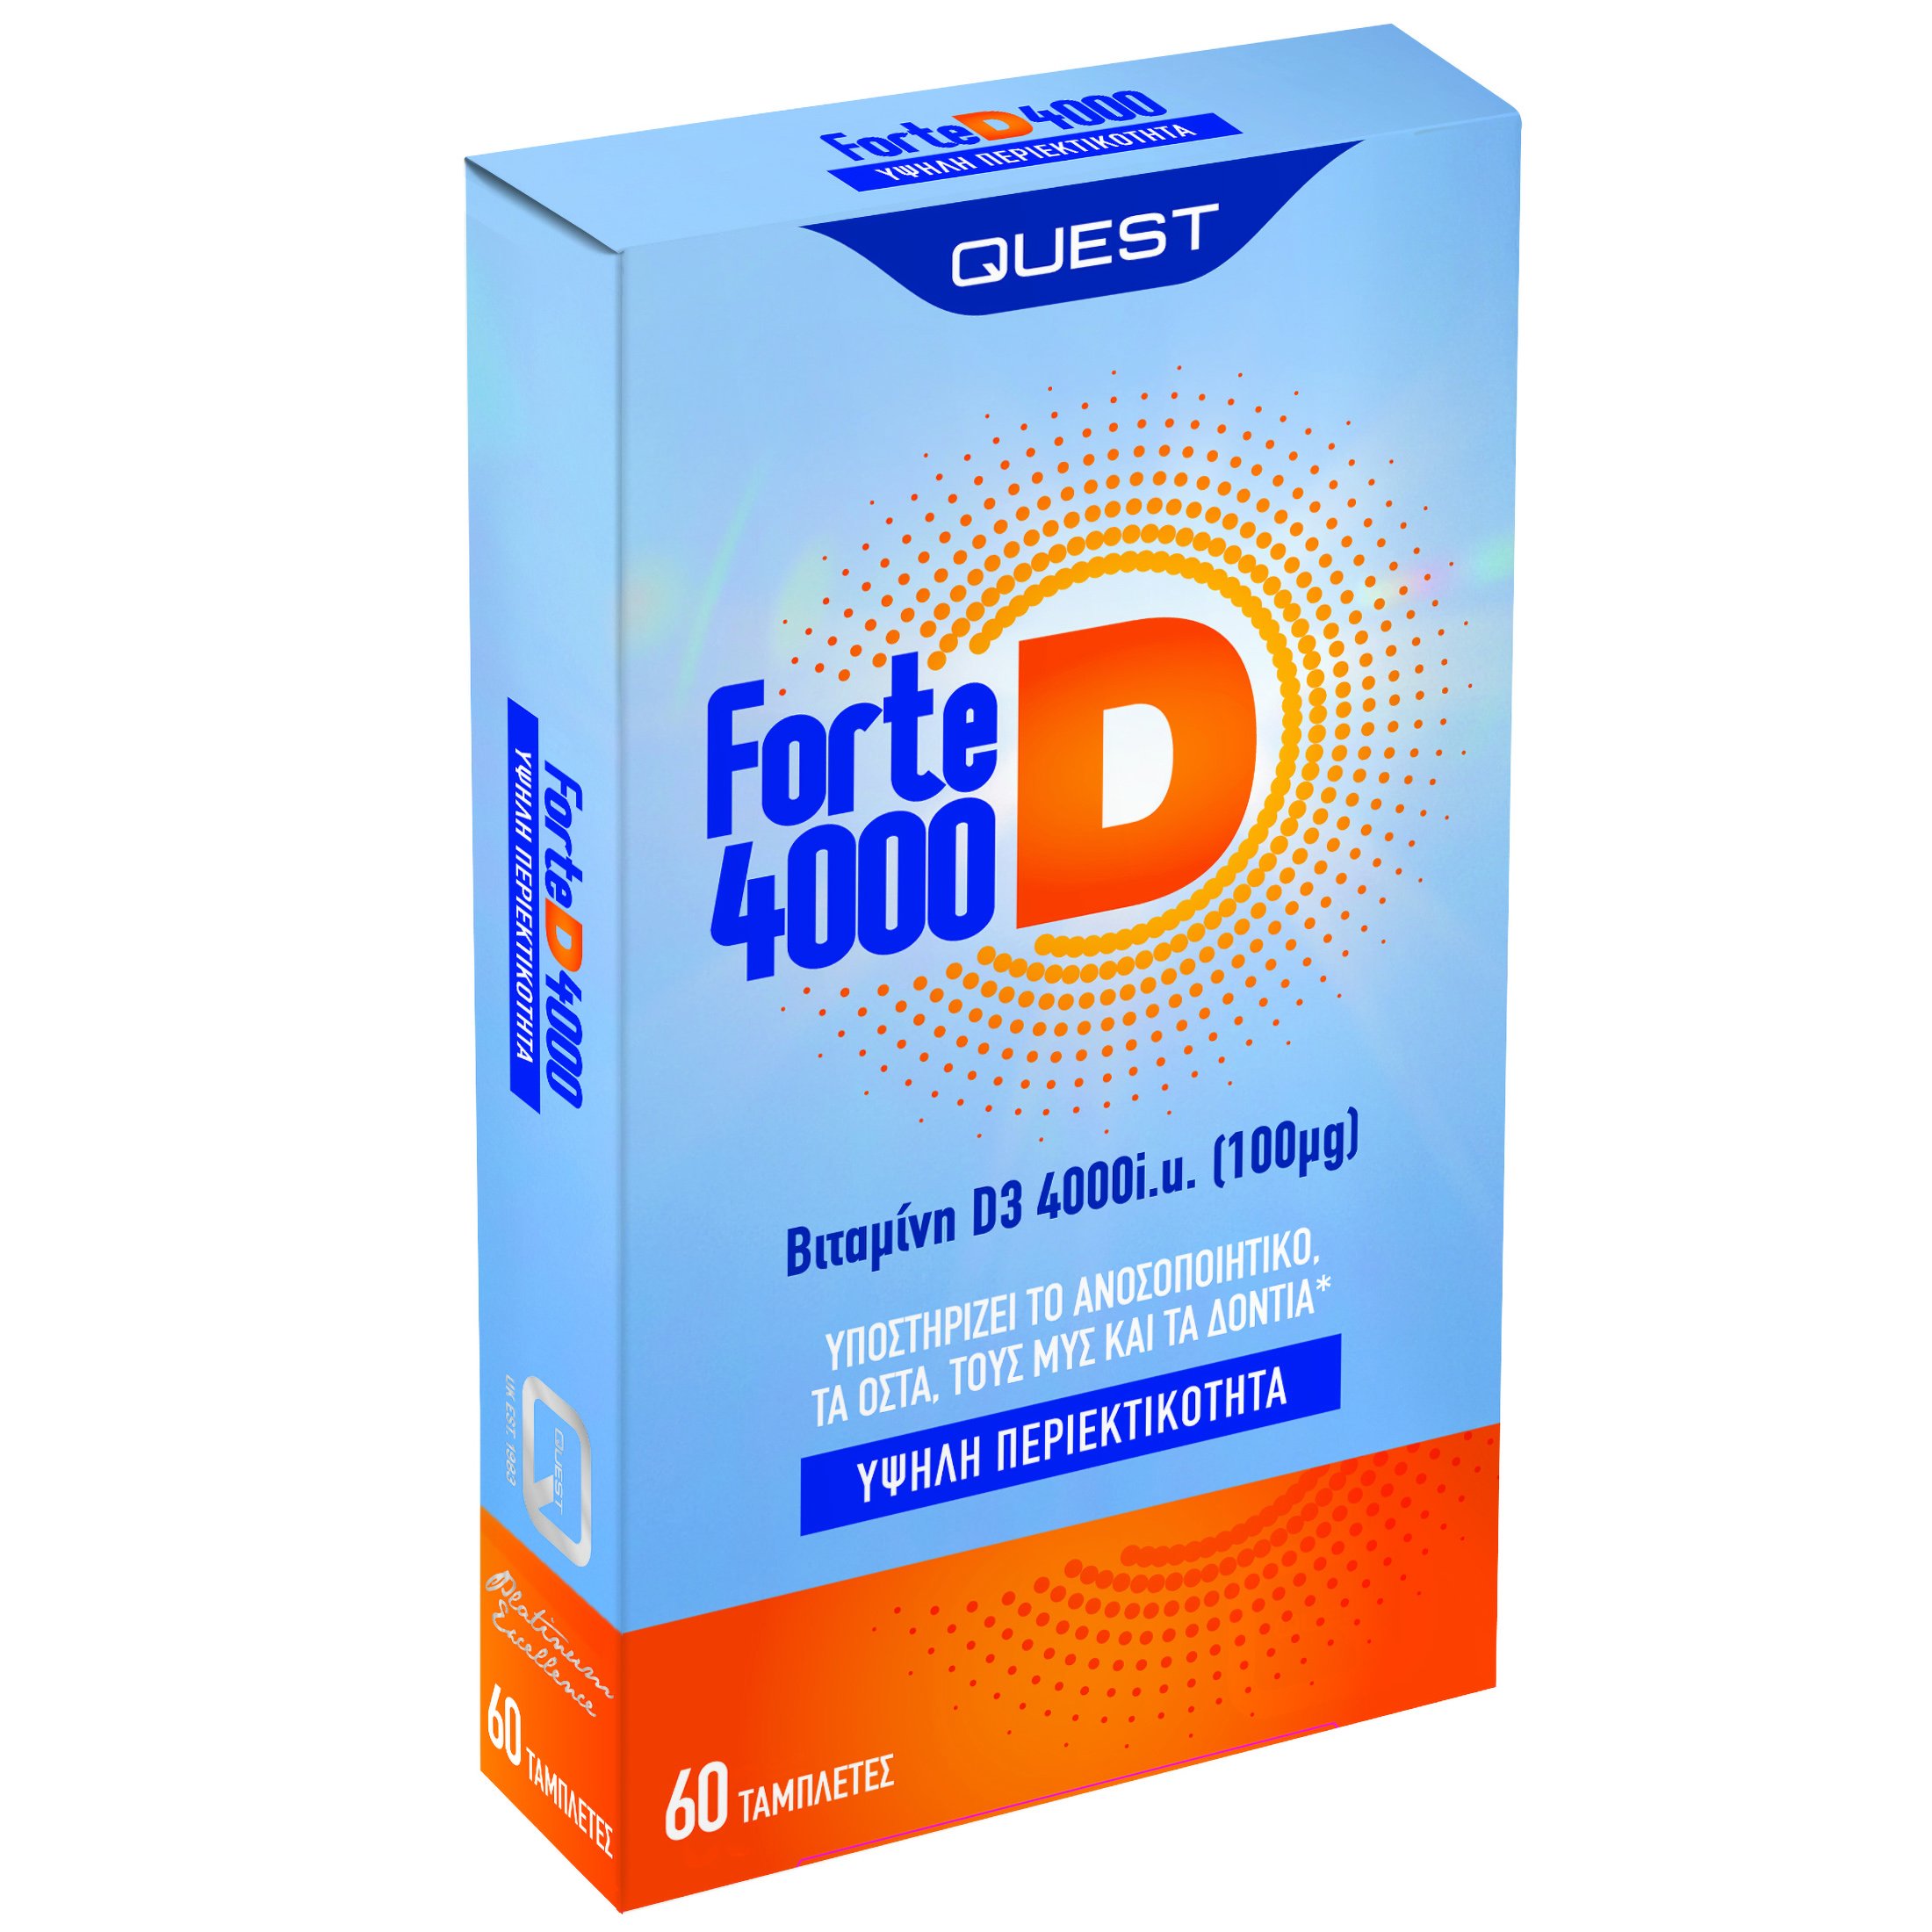 Quest Forte D 4000iu 100mg High Strength Συμπλήρωμα Διατροφής με Υψηλής Περιεκτικότητας Βιταμίνη D για Υποστήριξη του Ανοσοποιητικού, των Οστών, των Μυών & των Δοντιών 600tabs